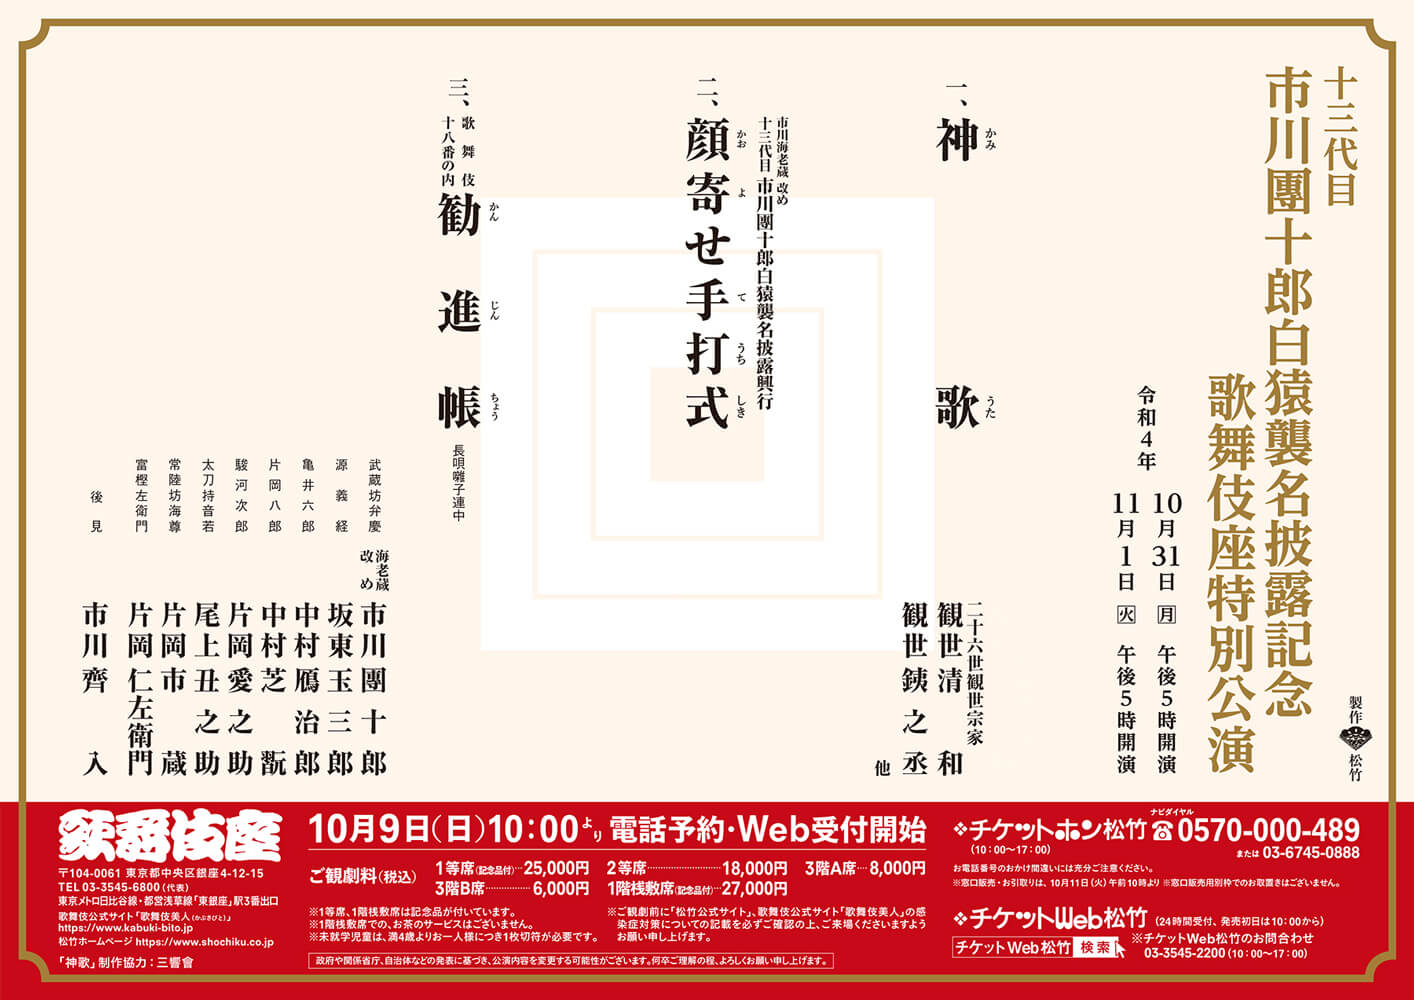 Kabukiza Theatre Special Program – The Name Succession of Ichikawa